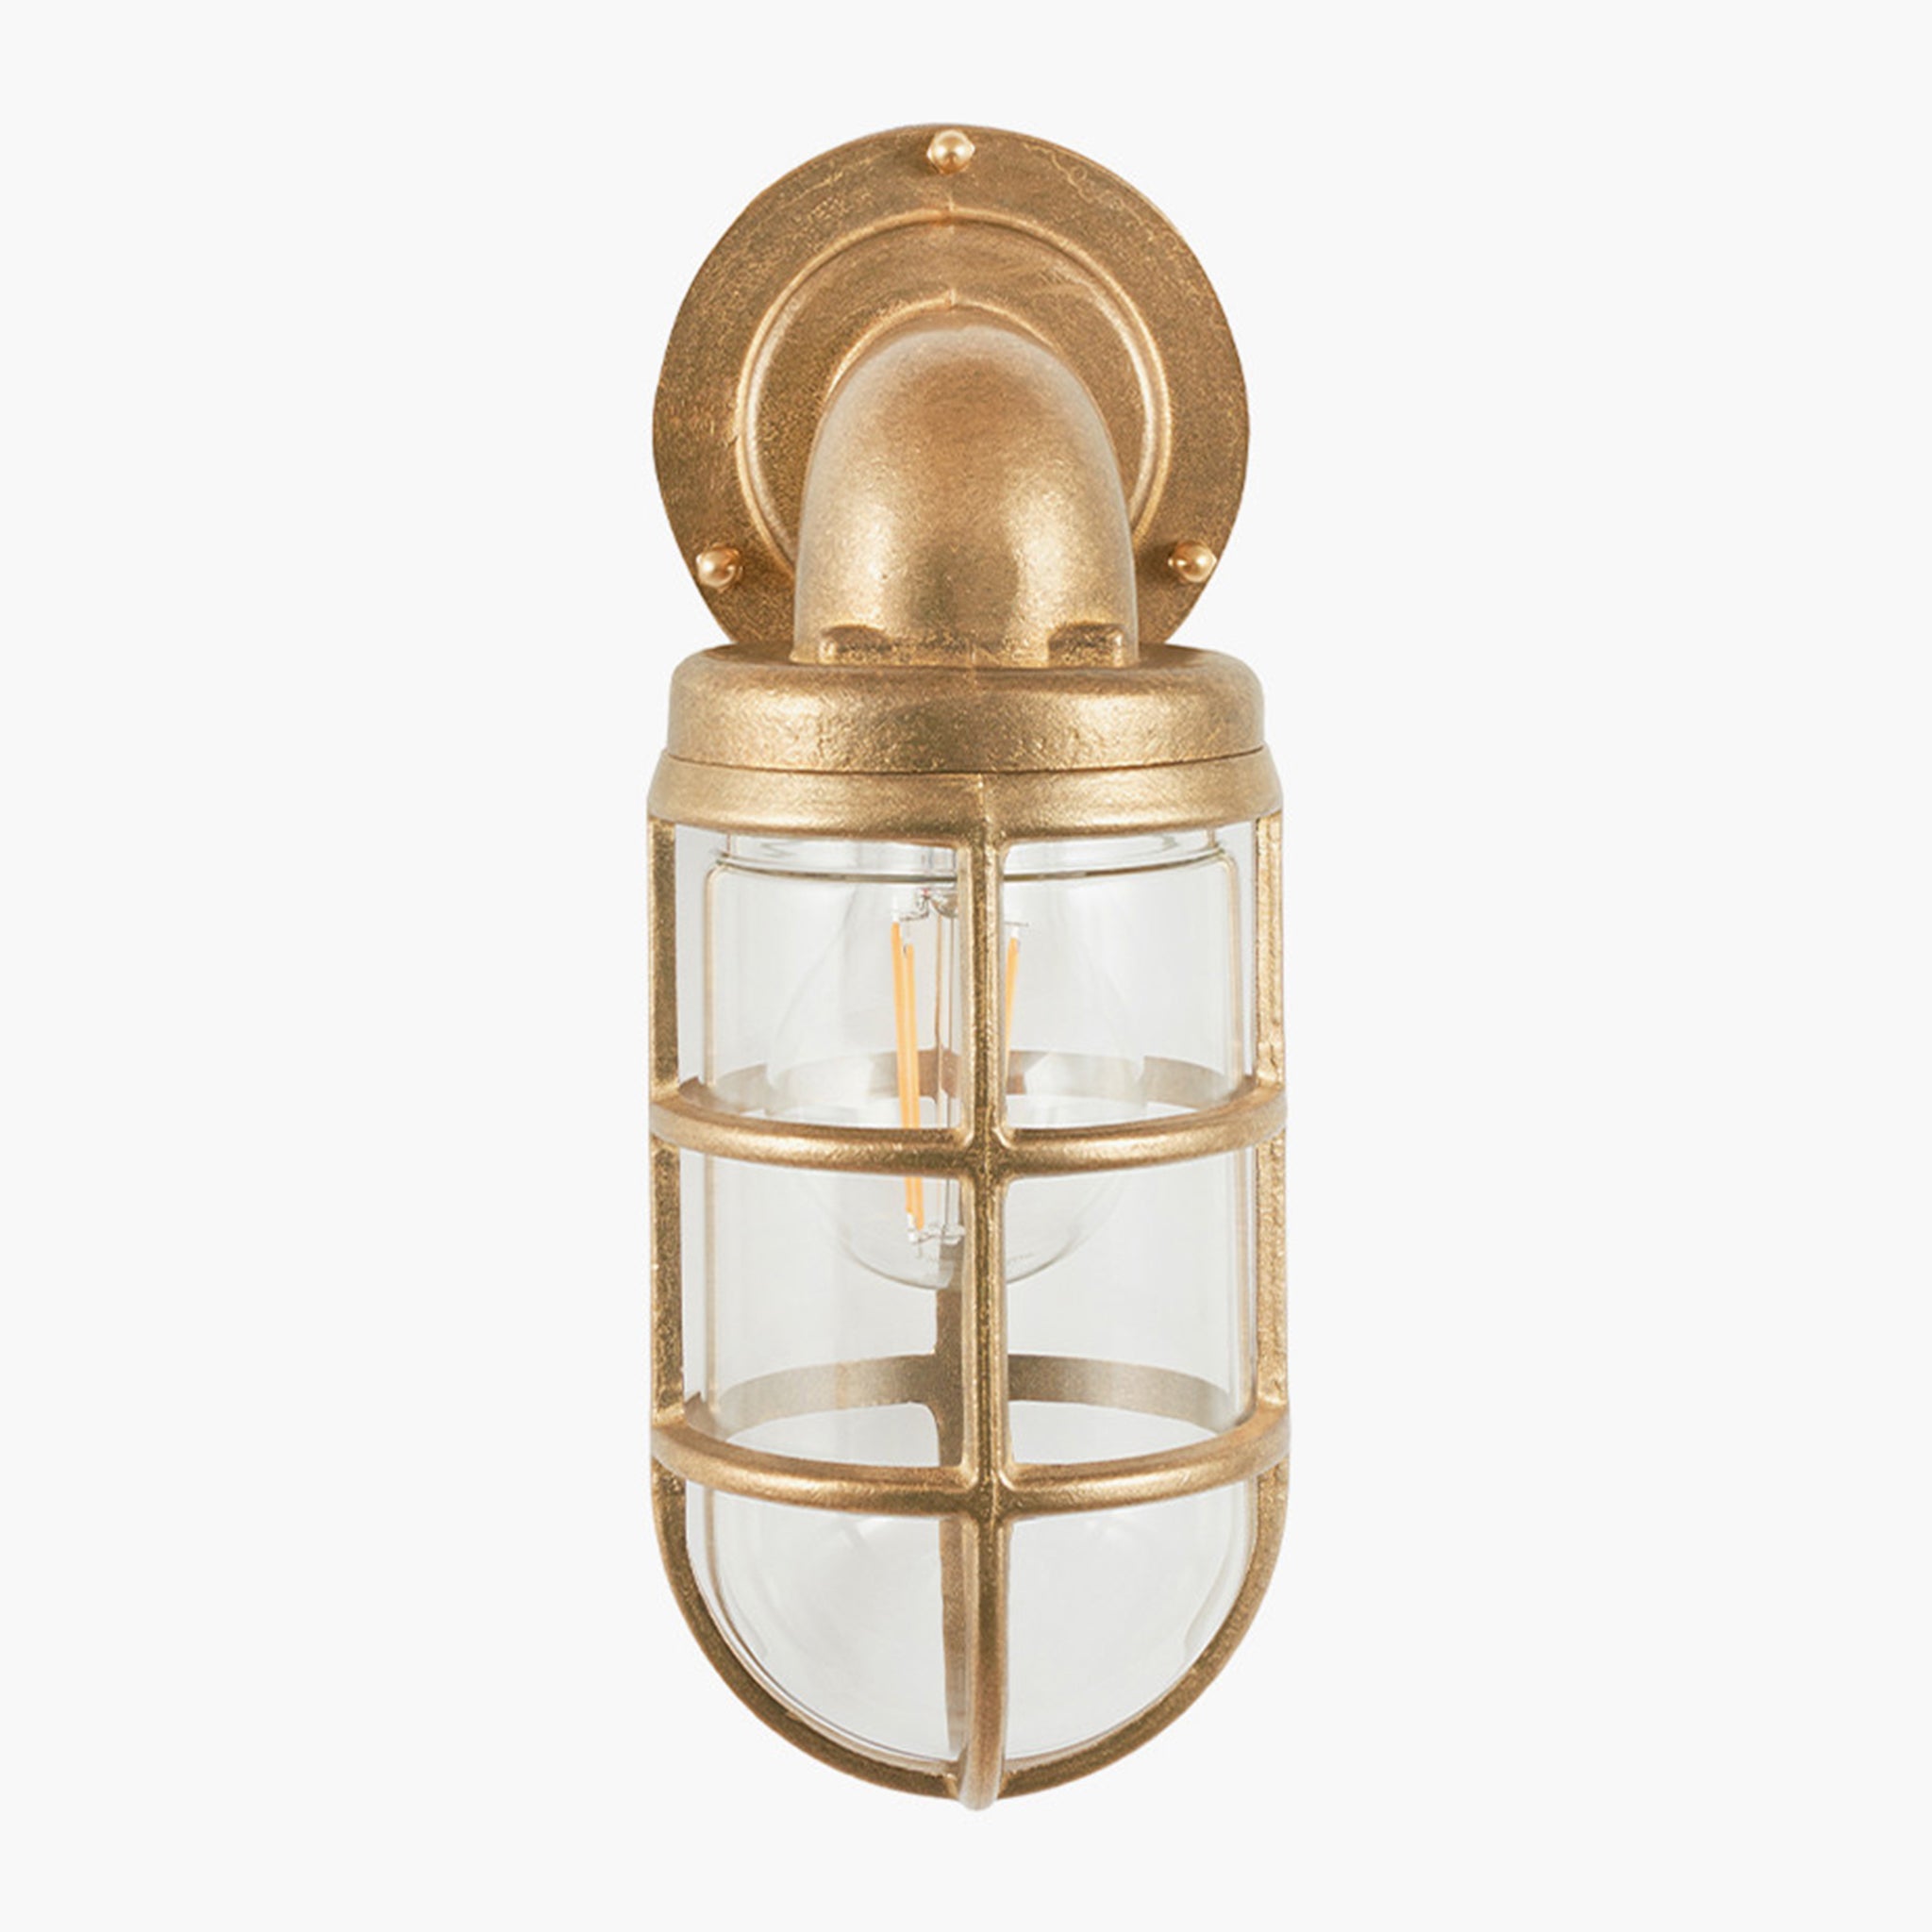 Lupin Antique Brass Metal Caged Handing Outdoor Wall Light